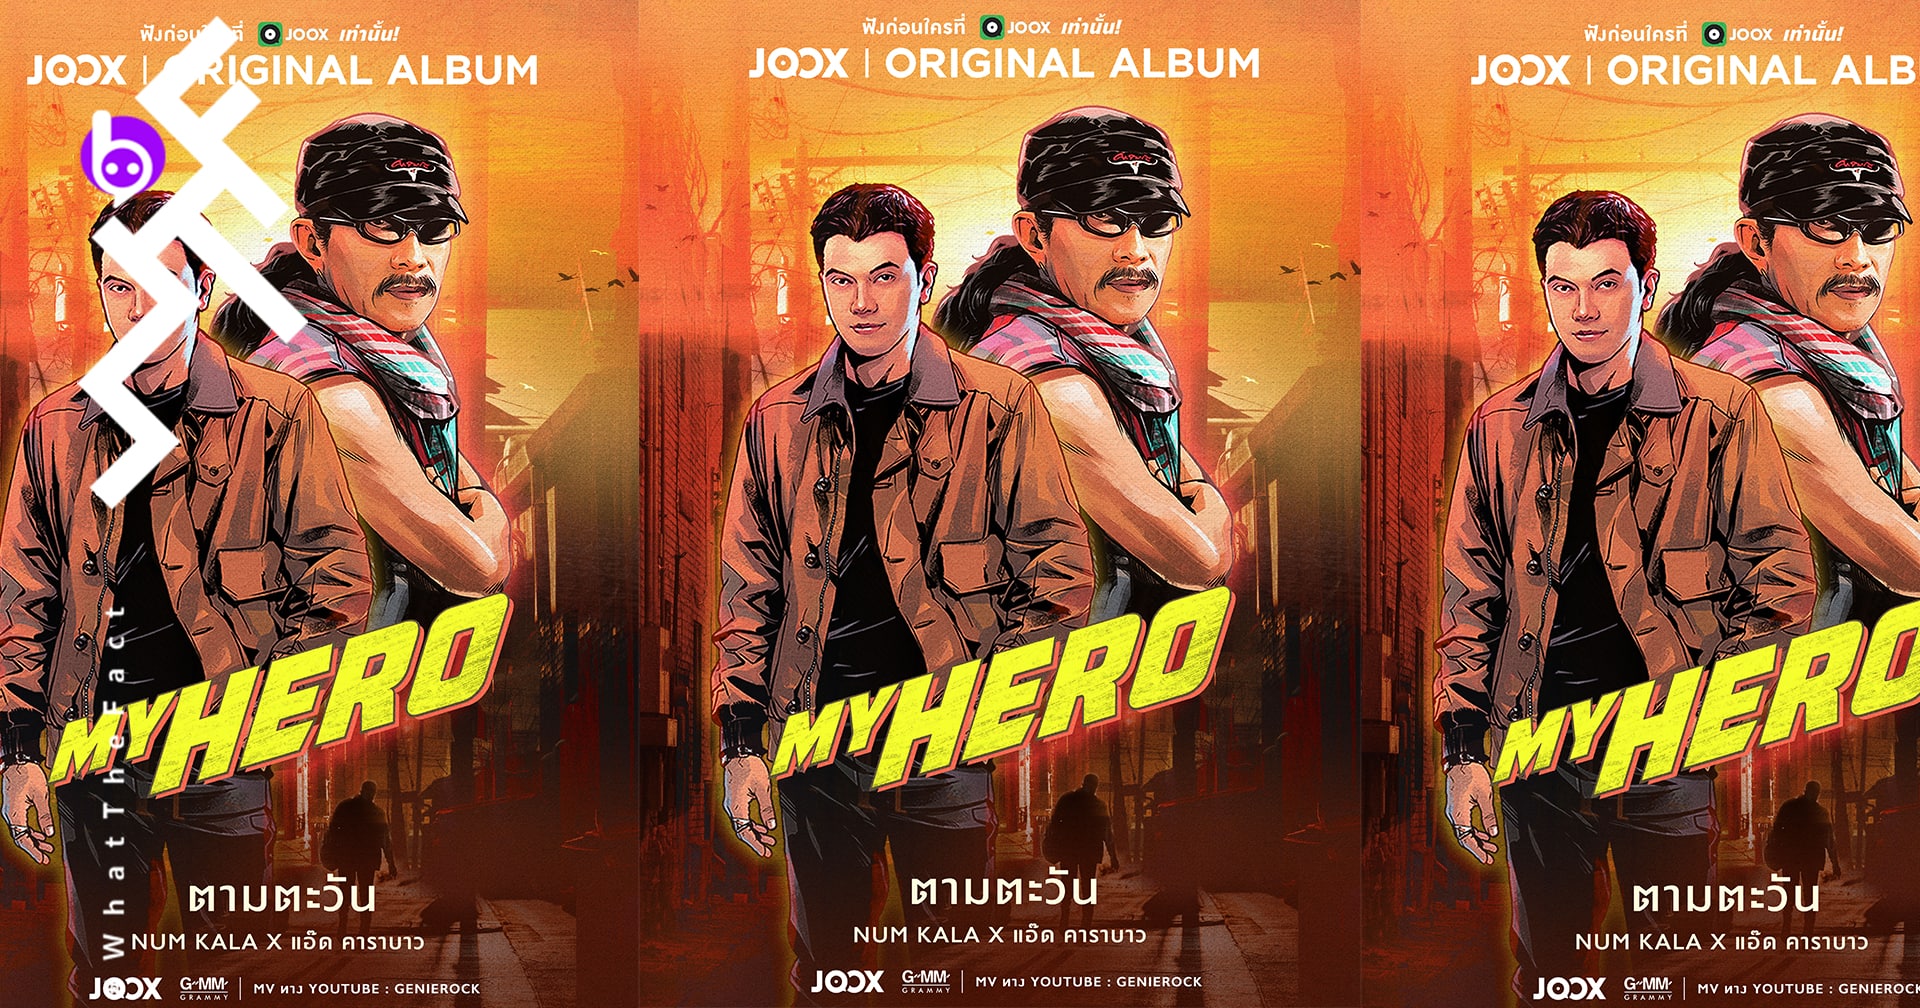 GMM Grammy จับมือ JOOX ปลุกแรงบันดาลใจ สร้างสีสันใหม่ให้วงการเพลงด้วยโพรเจกต์สุดพิเศษ JOOX ORIGINAL ALBUM “MY HERO”